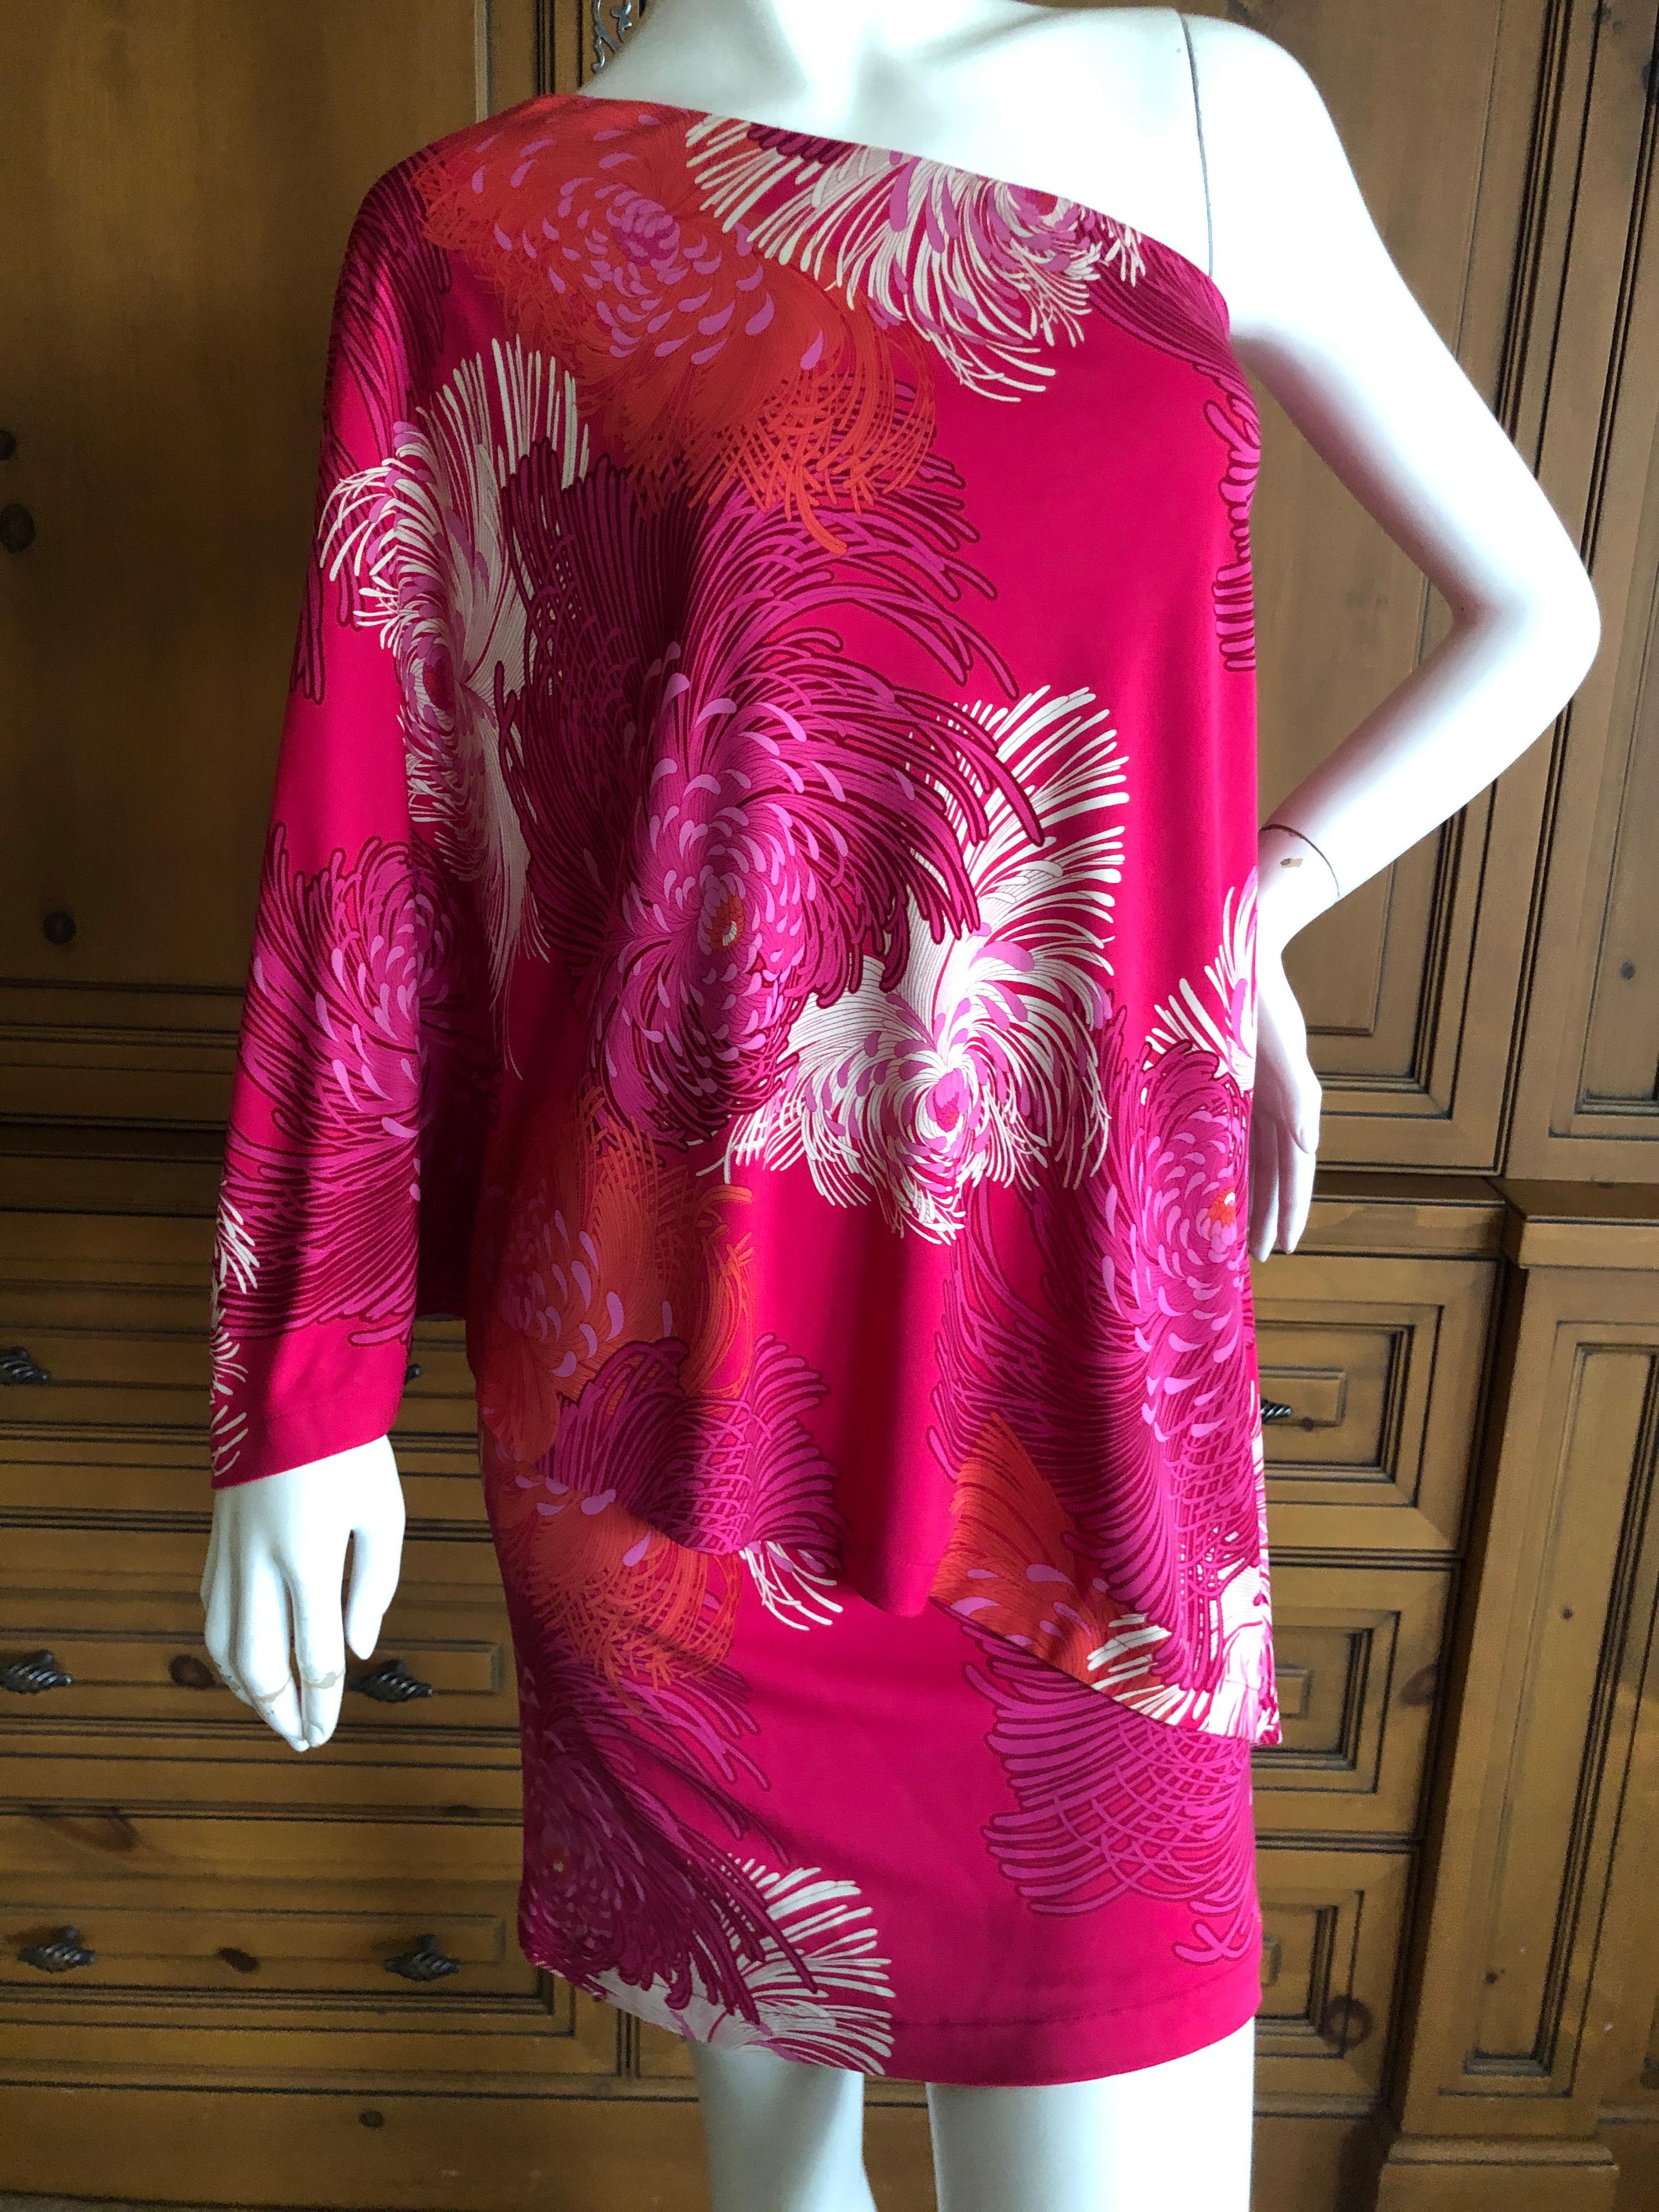 Gucci Chrysanthemum Print One Sleeve Mini Dress .
Size XS
Bust 34